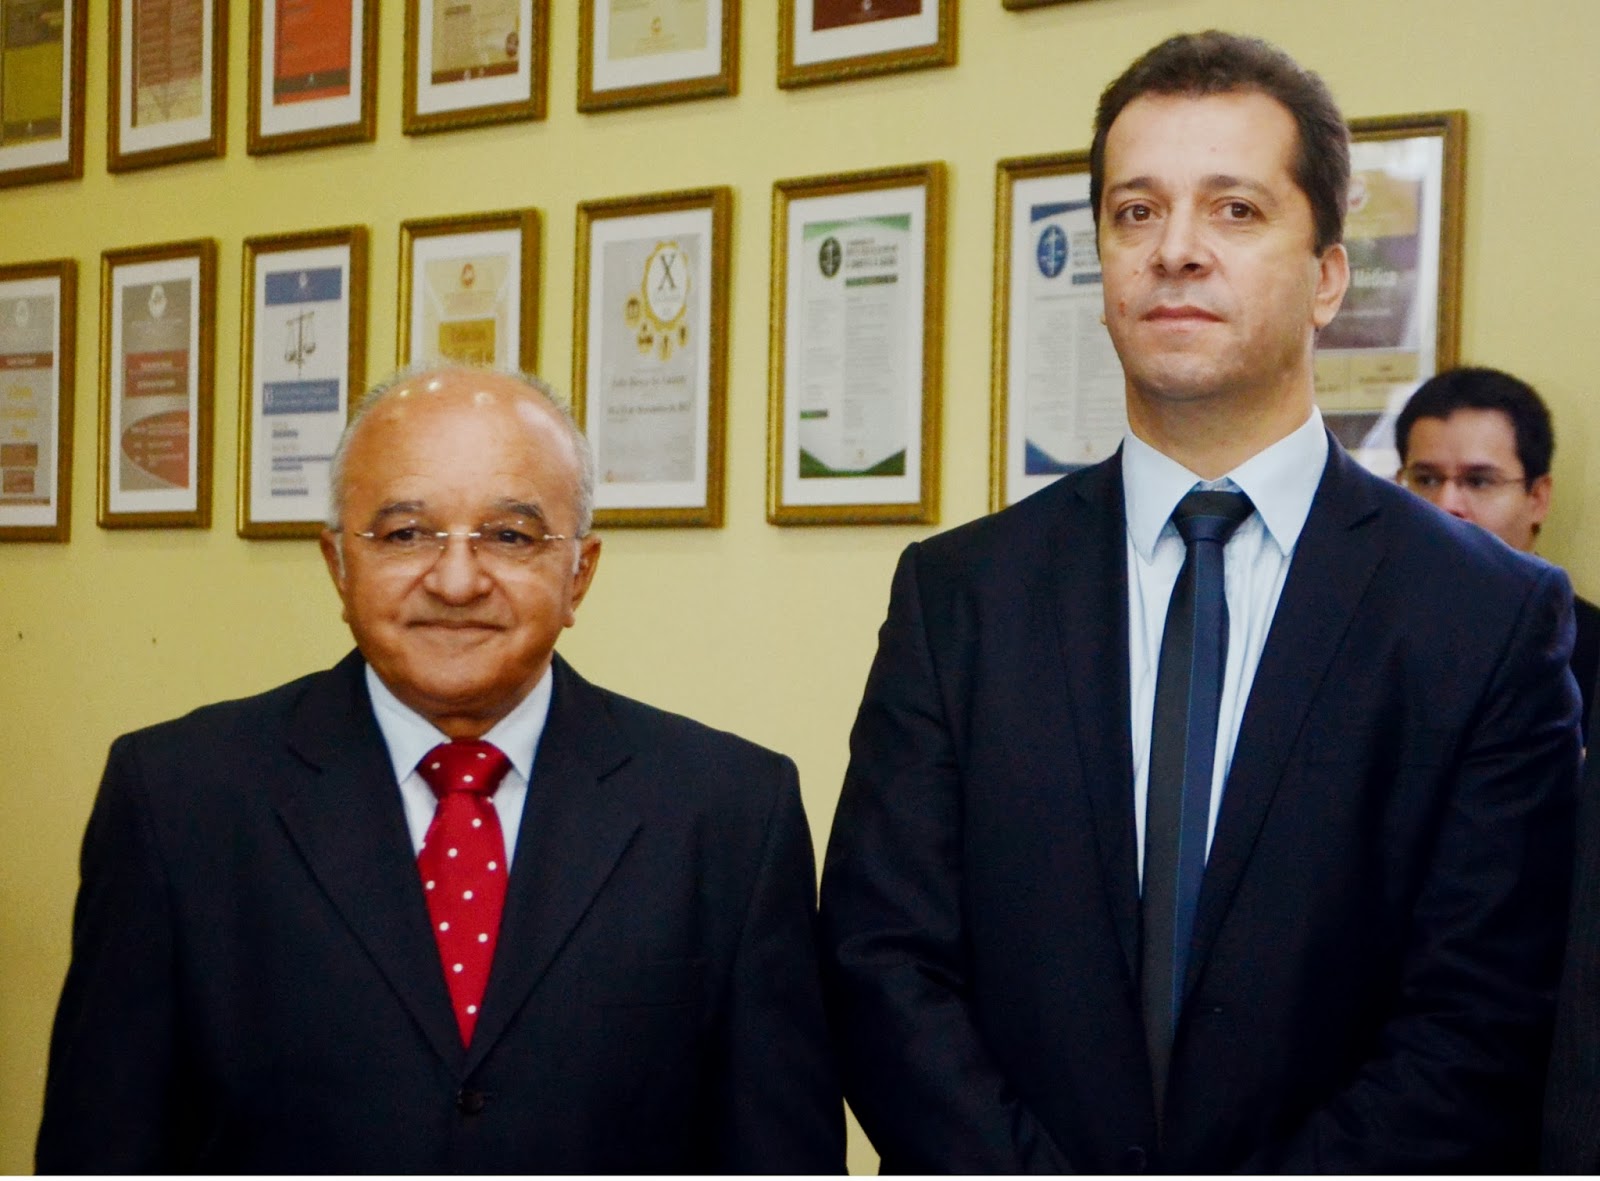 Слева - вице-губернатор Жозе Мелу (осуждён за преступления), справа - Марсело Резенде